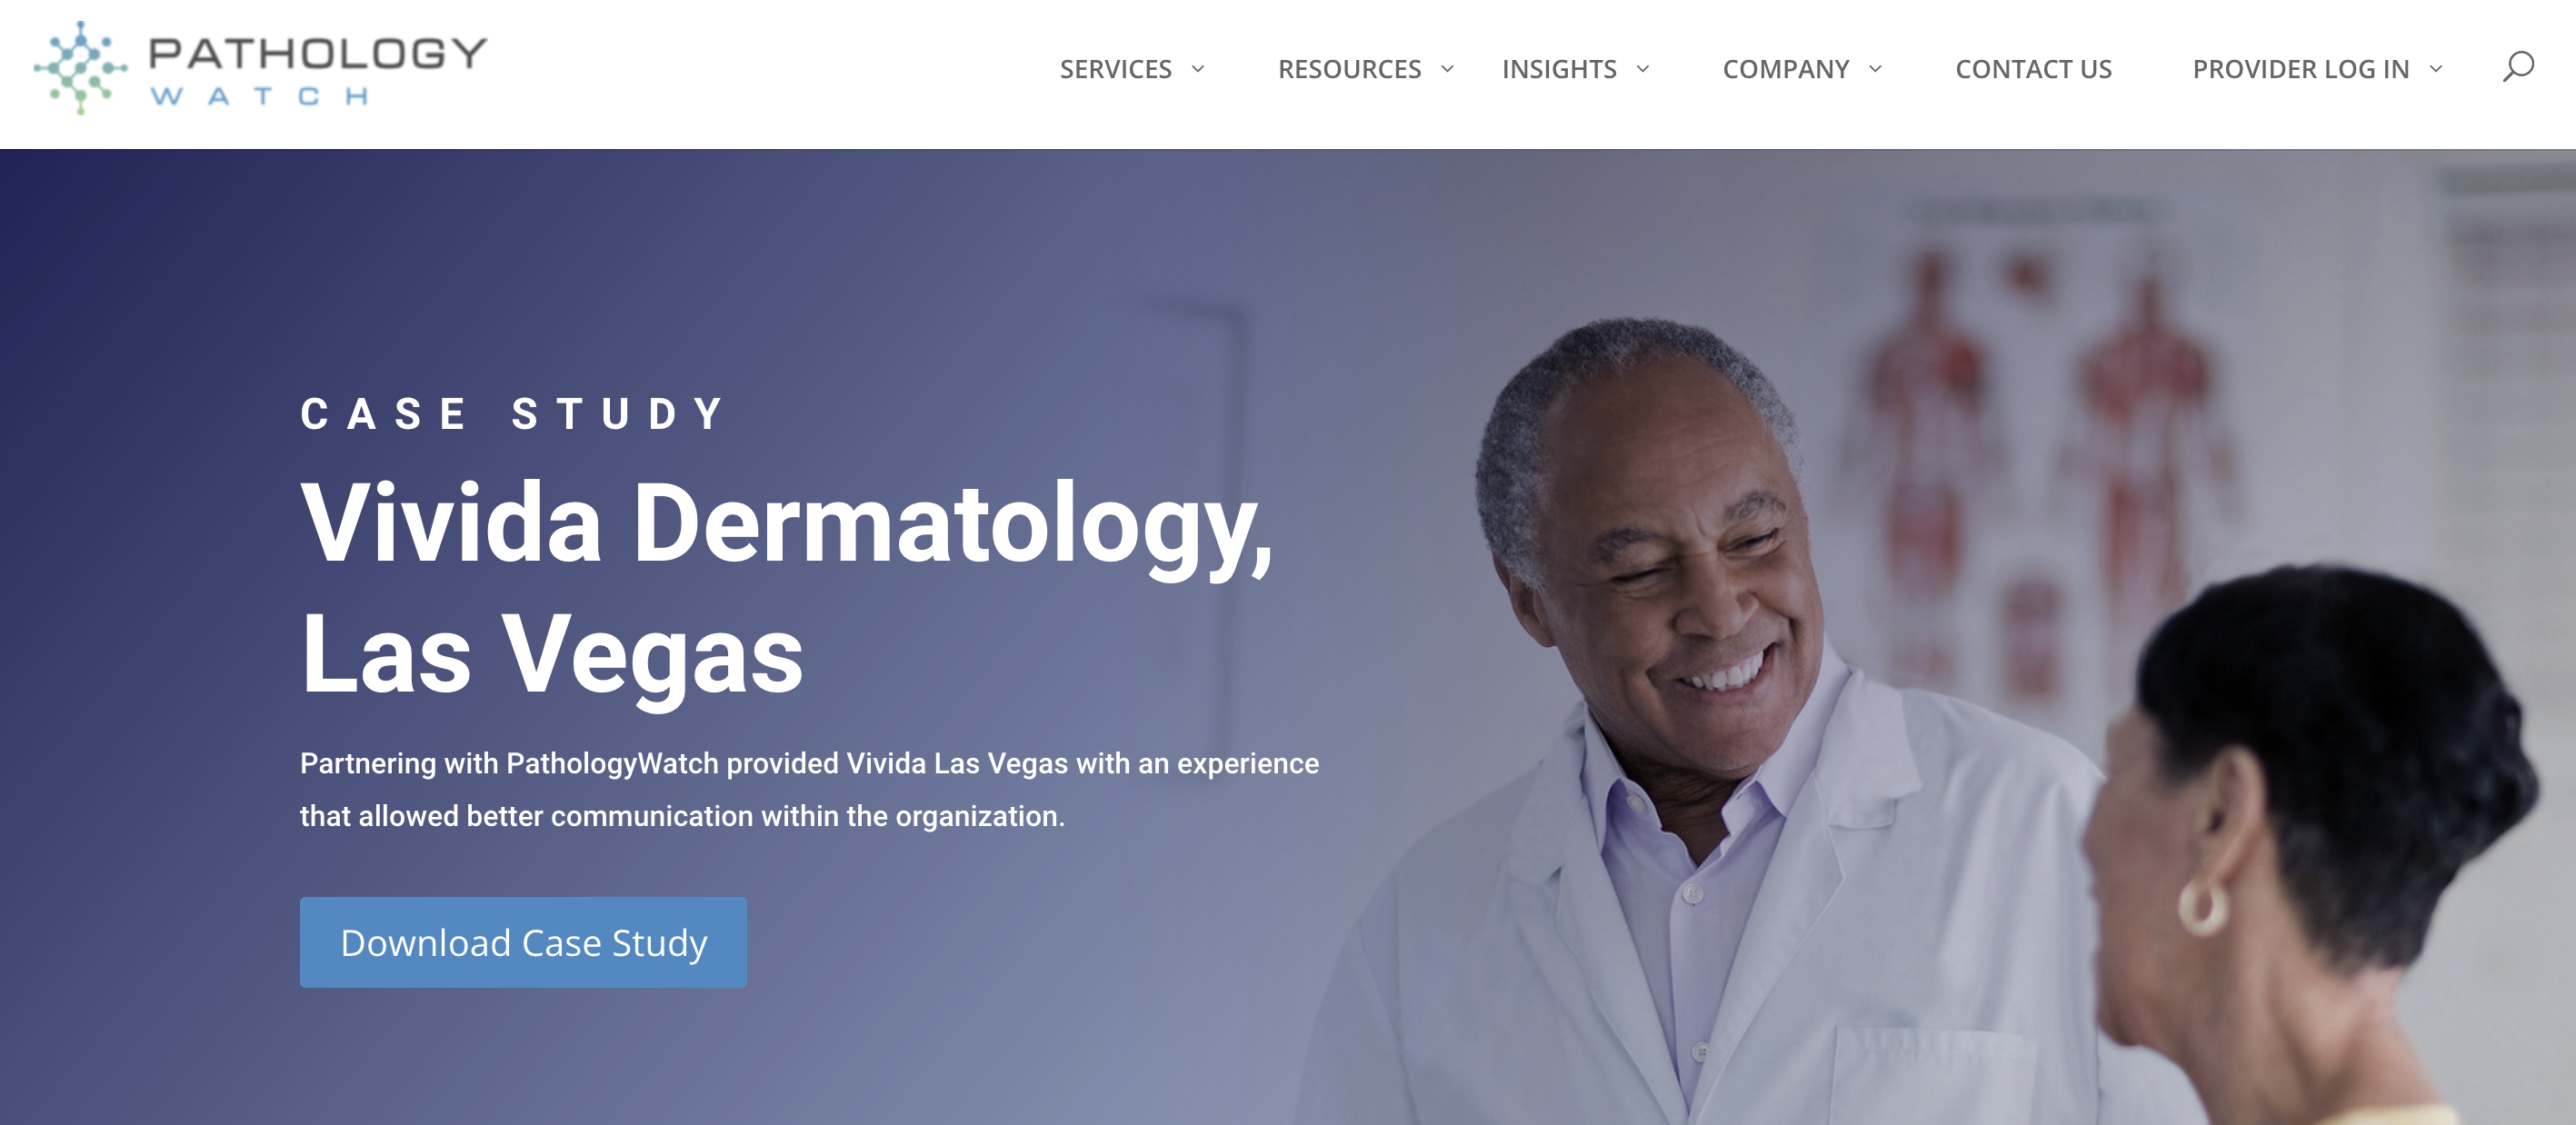 Vivida Dermatology Case Study